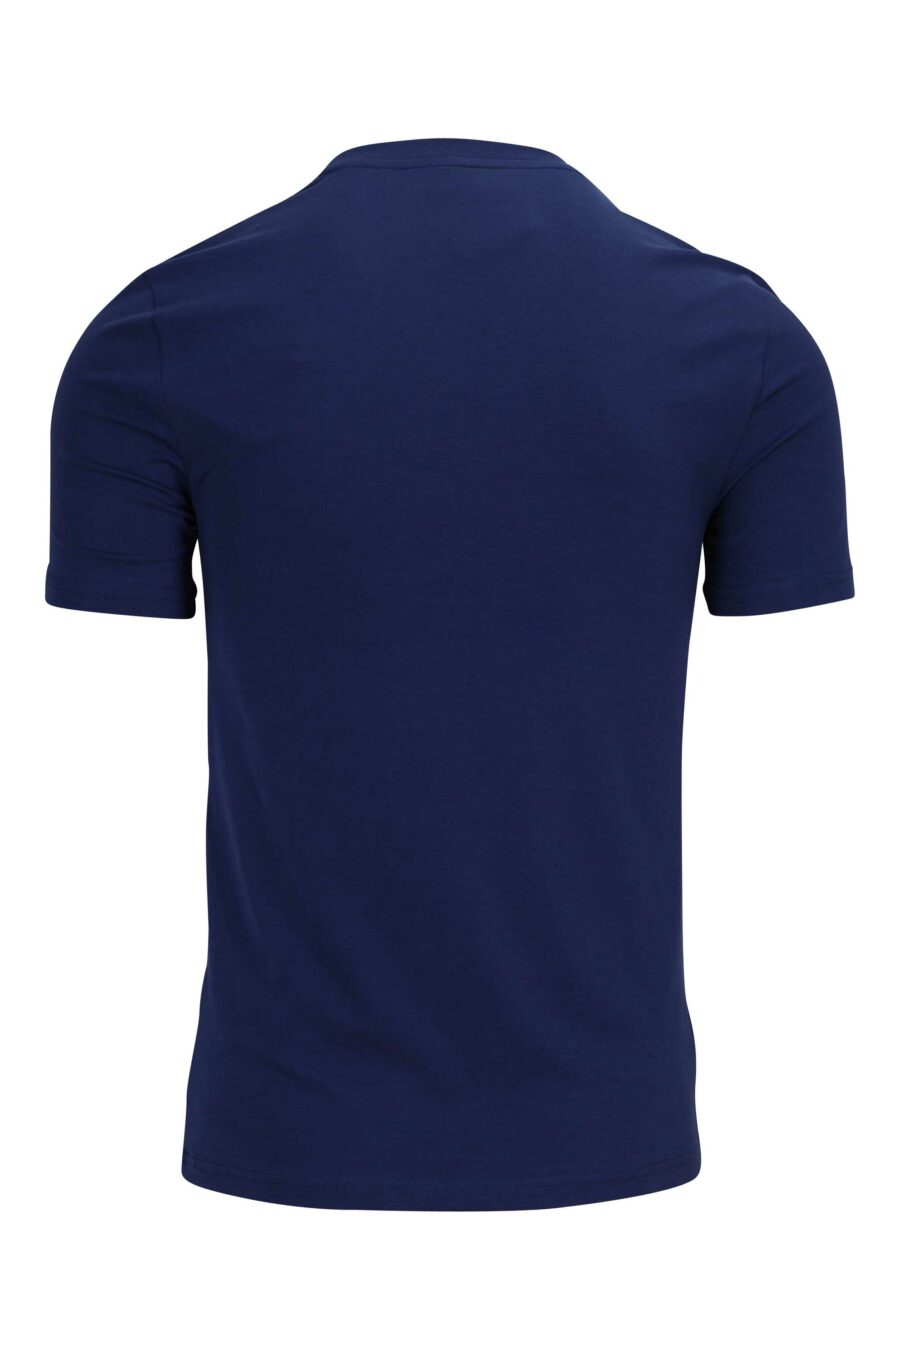 Camiseta azul marino con maxilogo negro - 889316649383 1